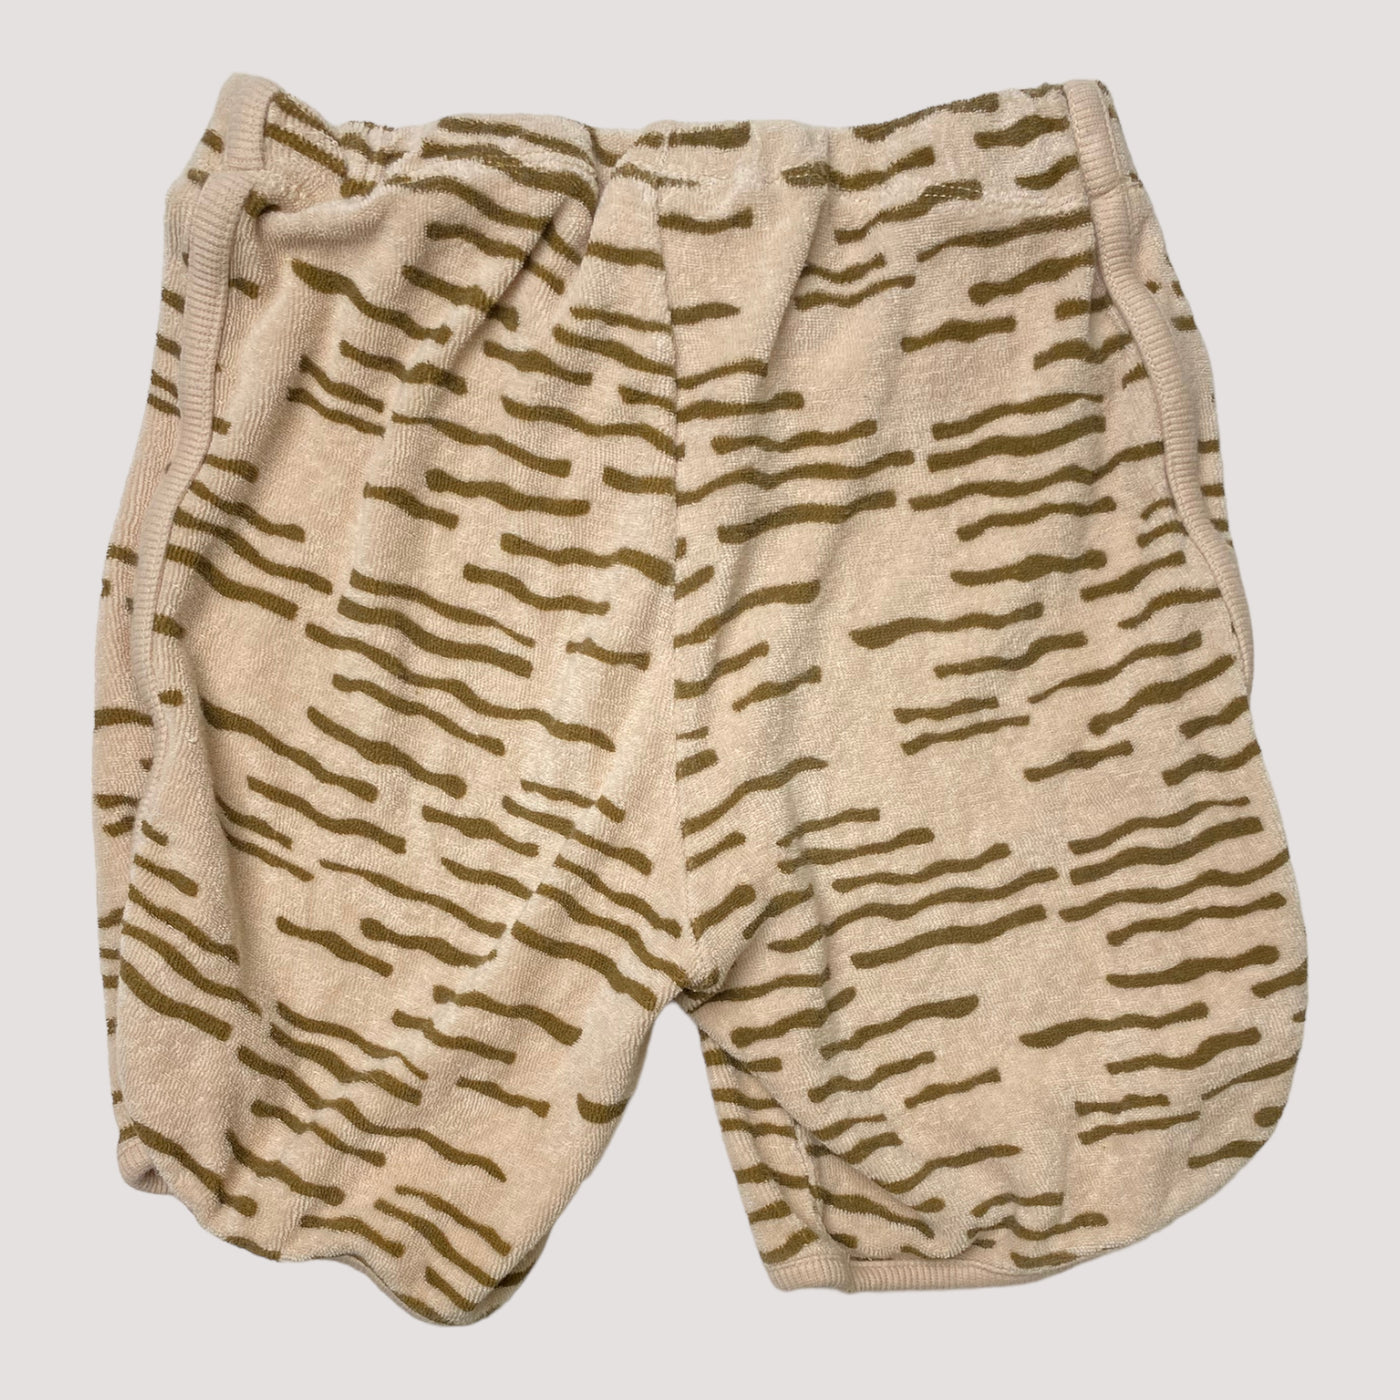 Mainio terry shorts, pink | 134/140cm